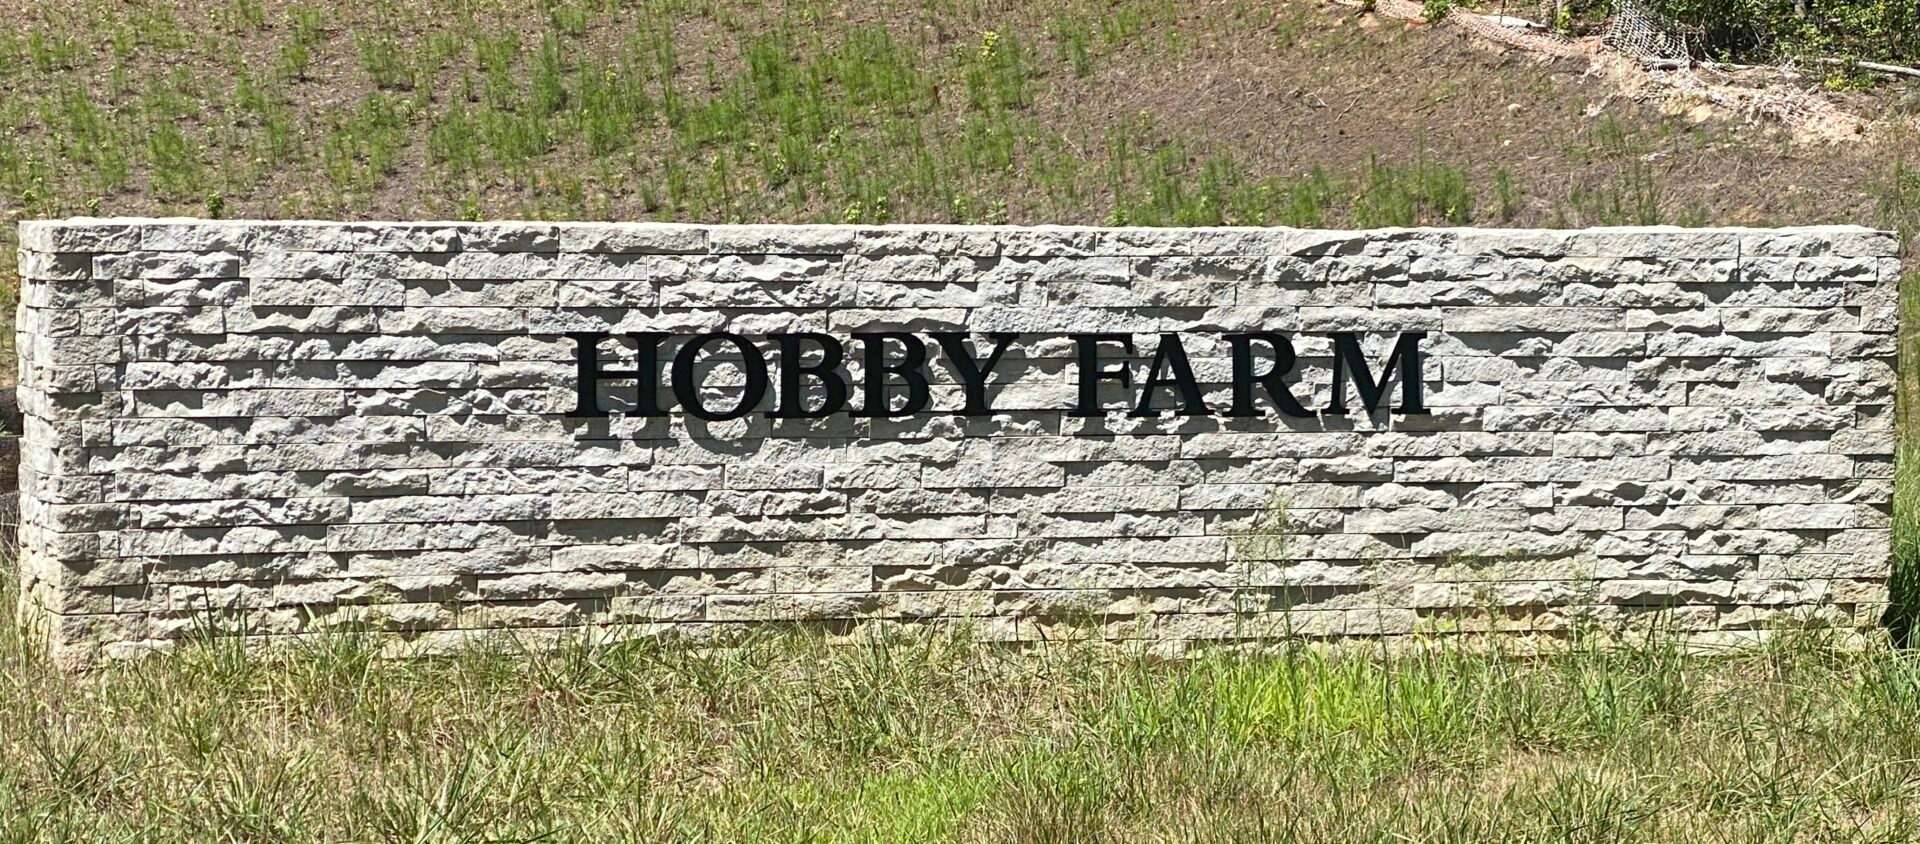 Hobby Farm Name on a Wall Outside